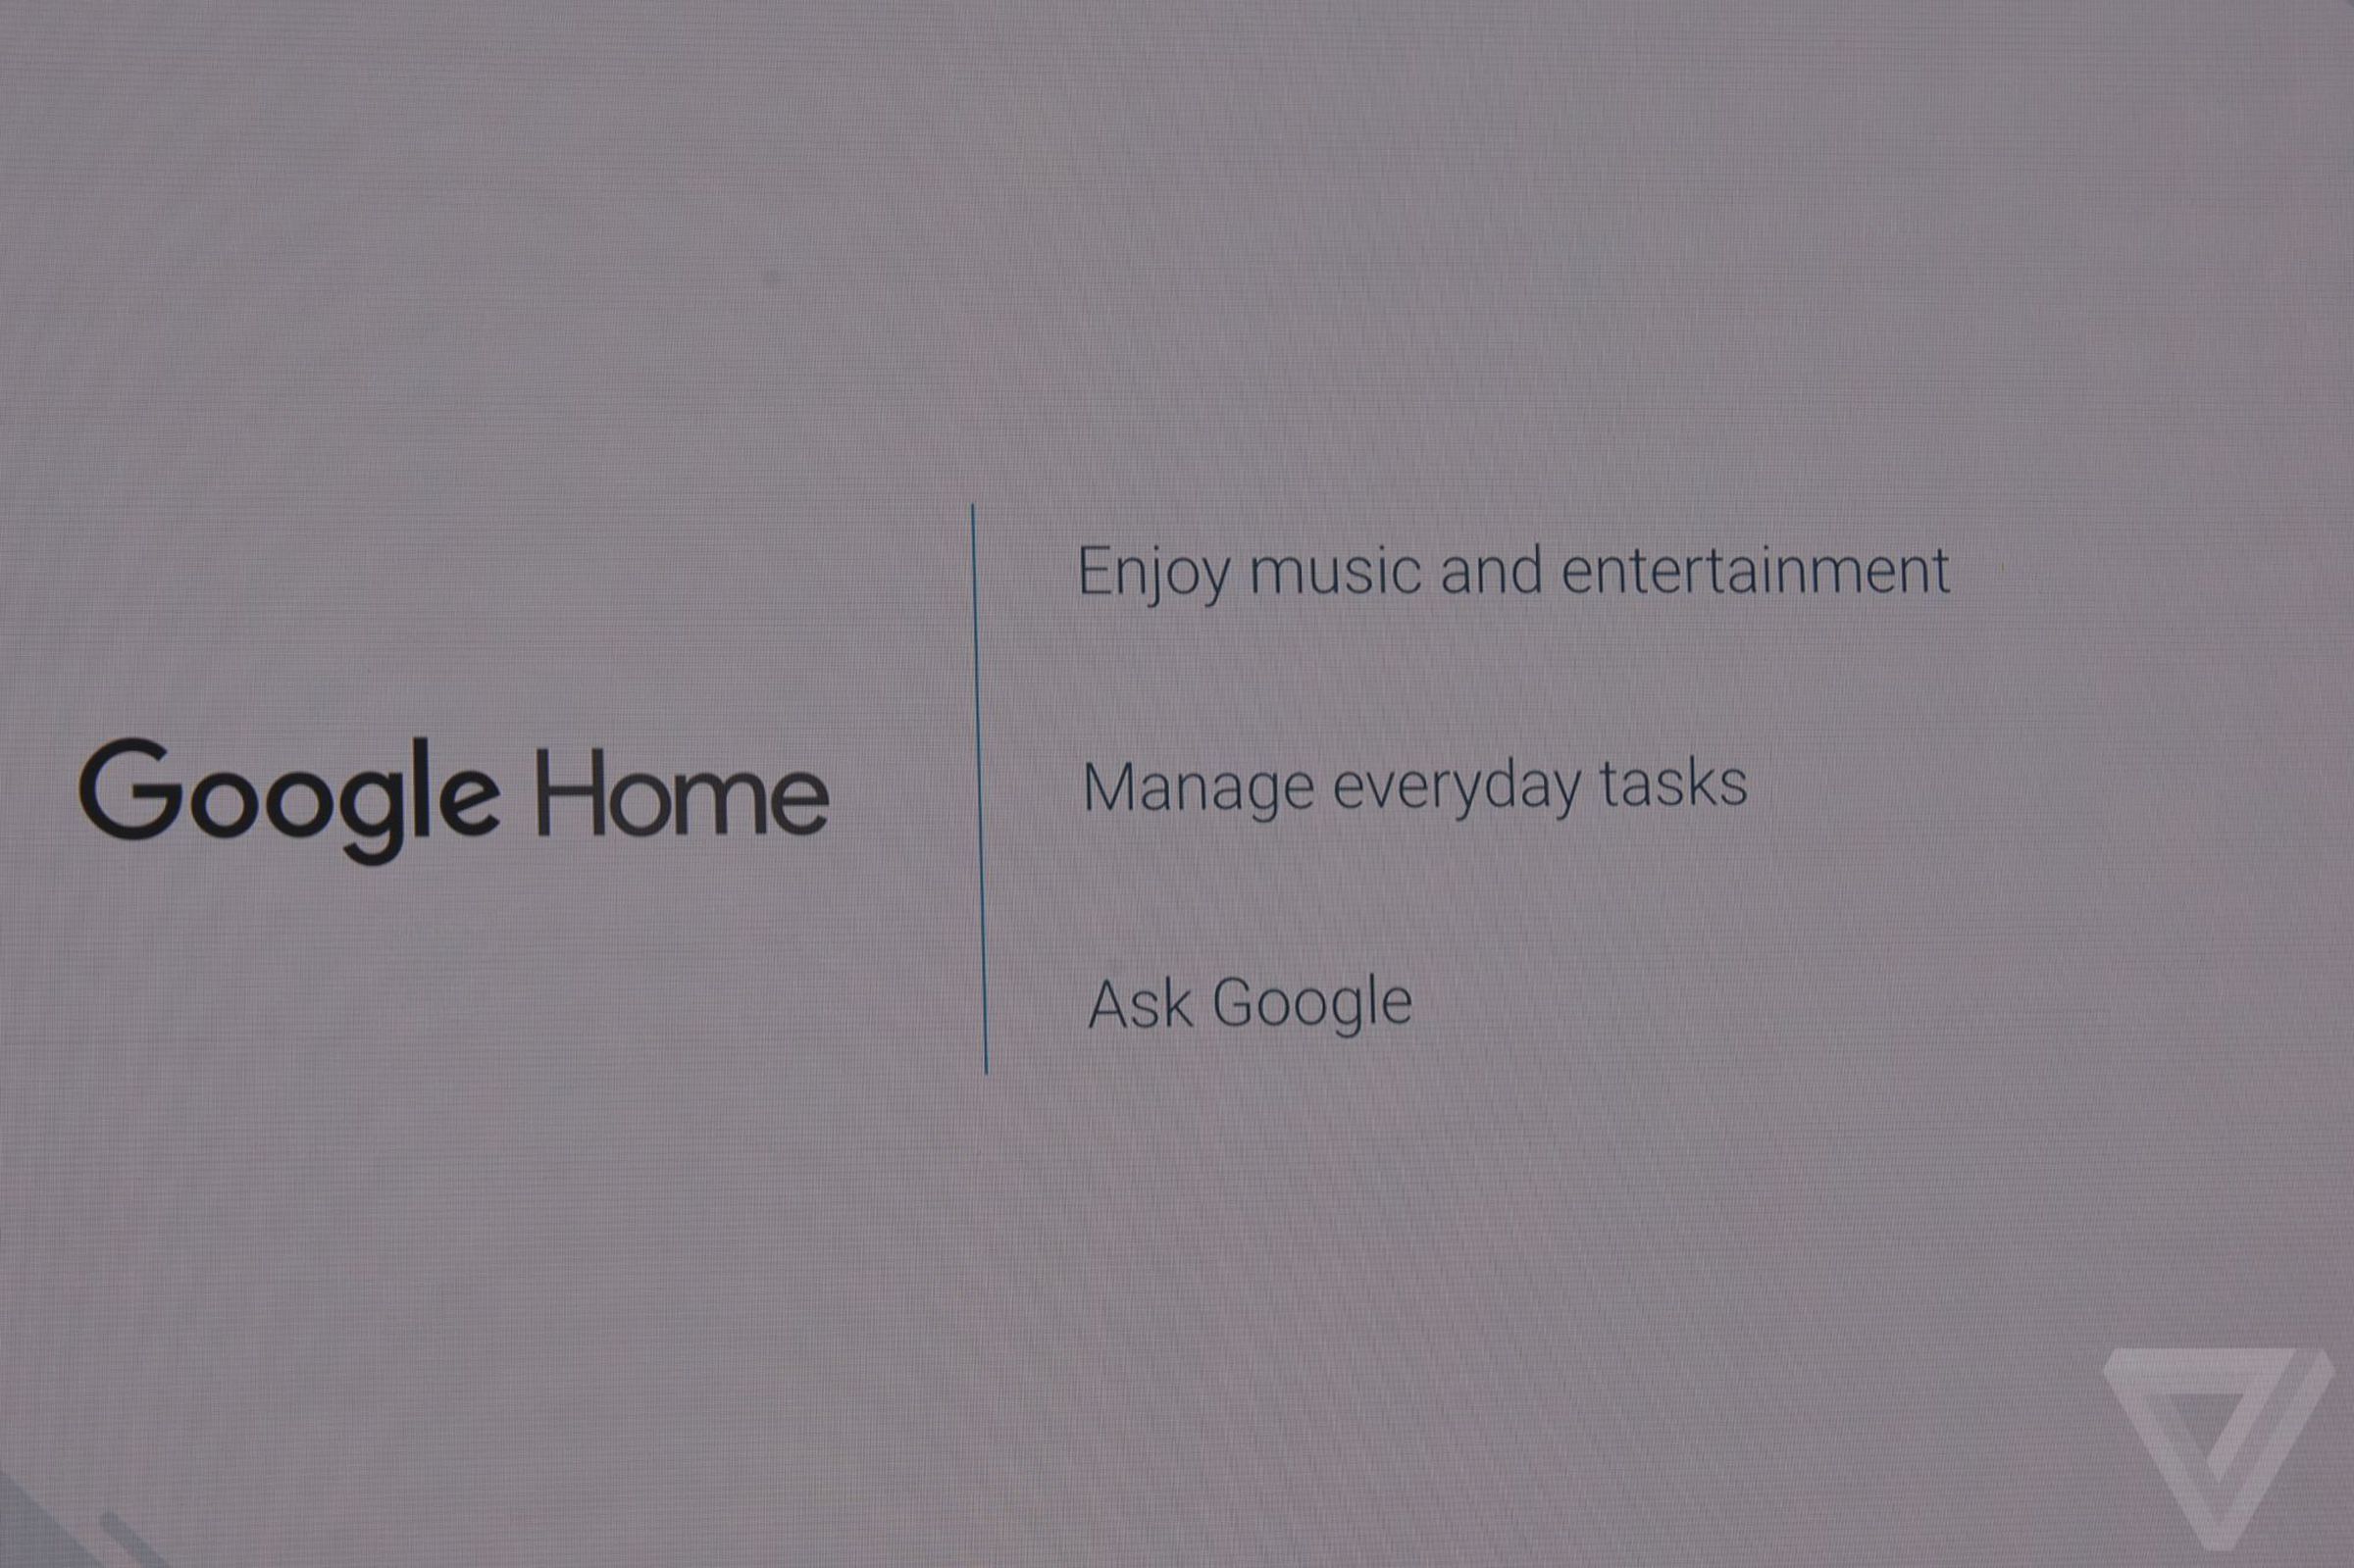 Google Home at Google I/O 2016 photos